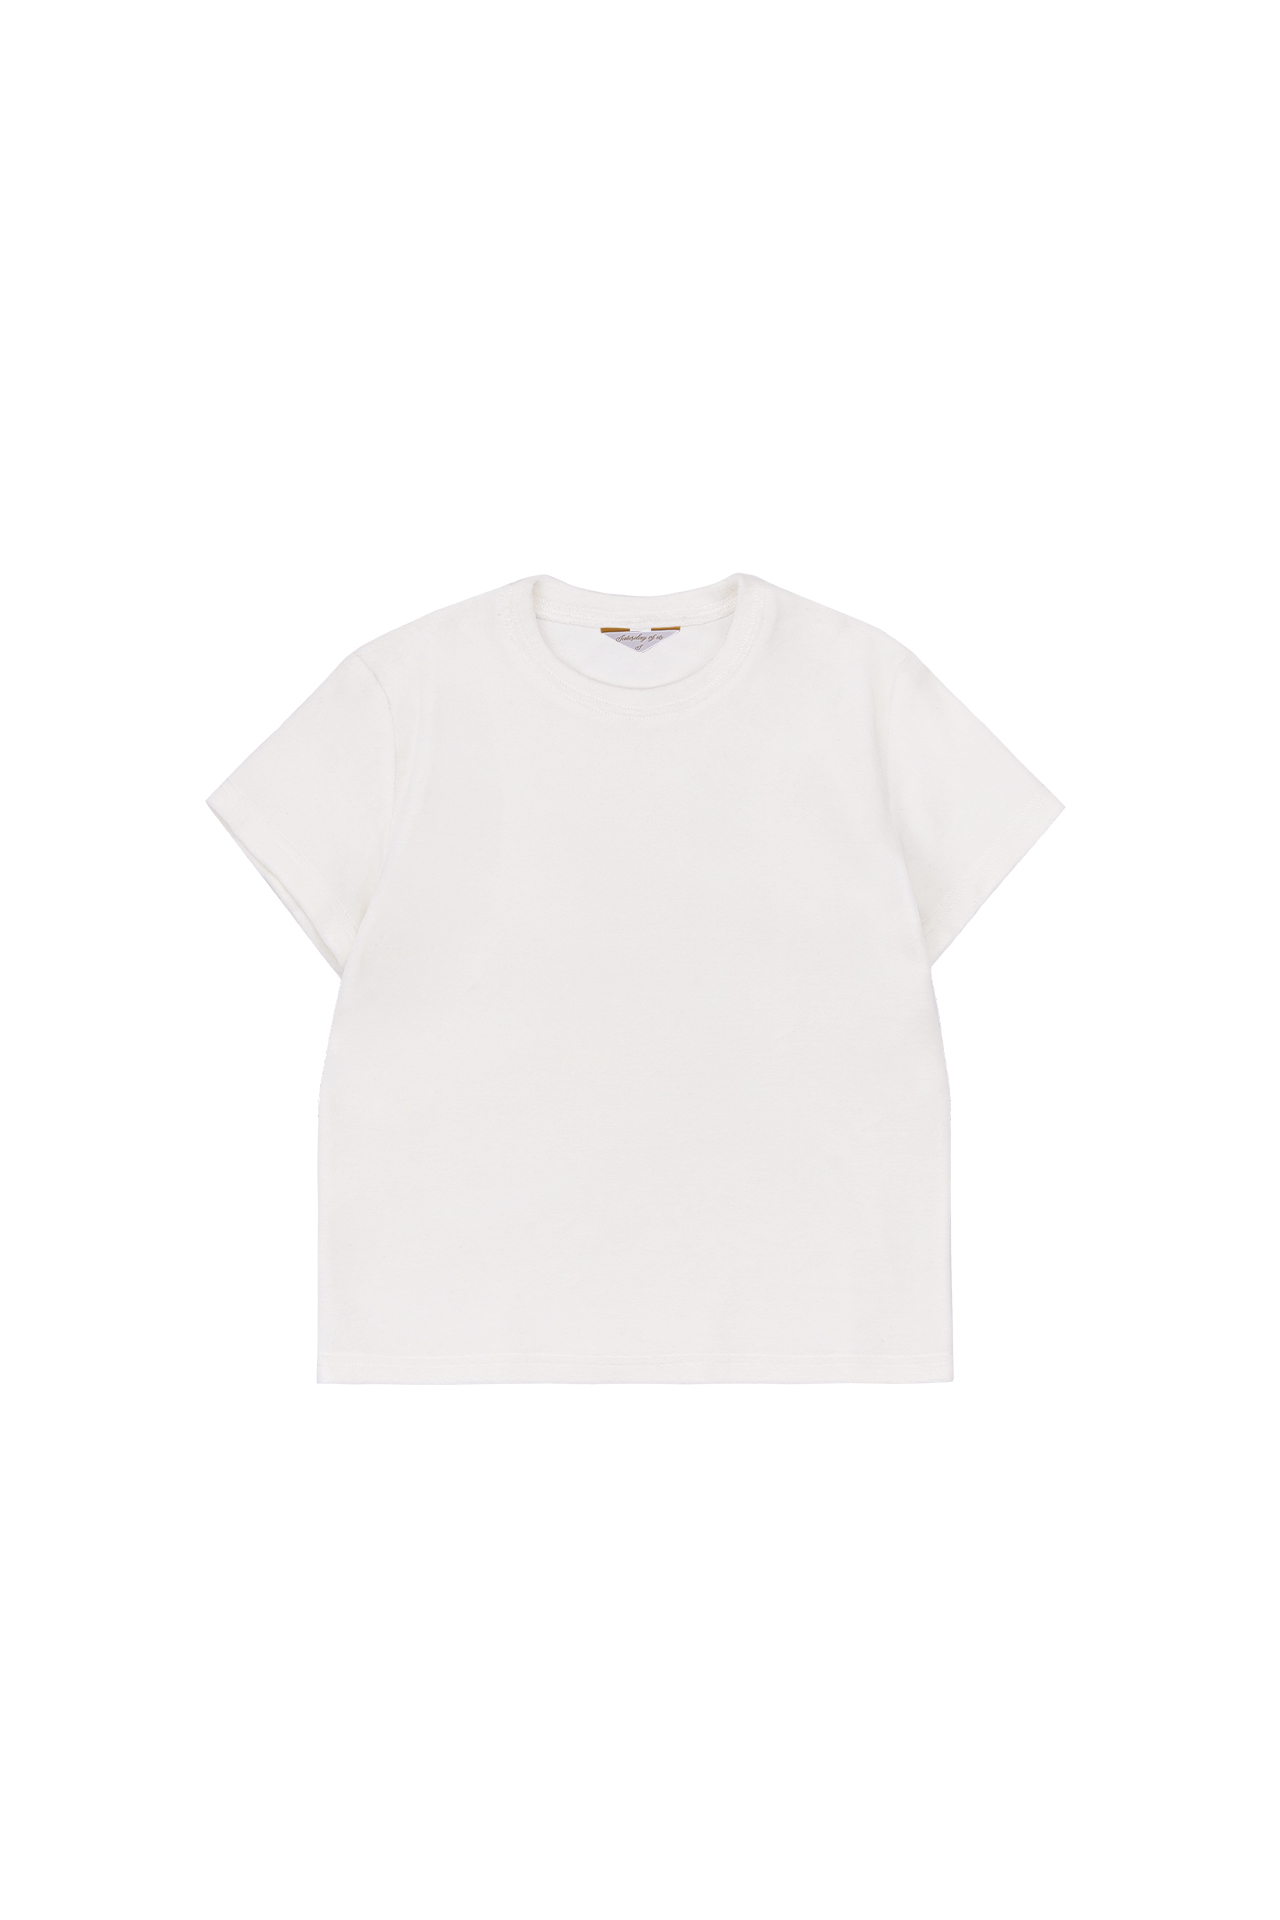 Women’s T-shirt Ivory